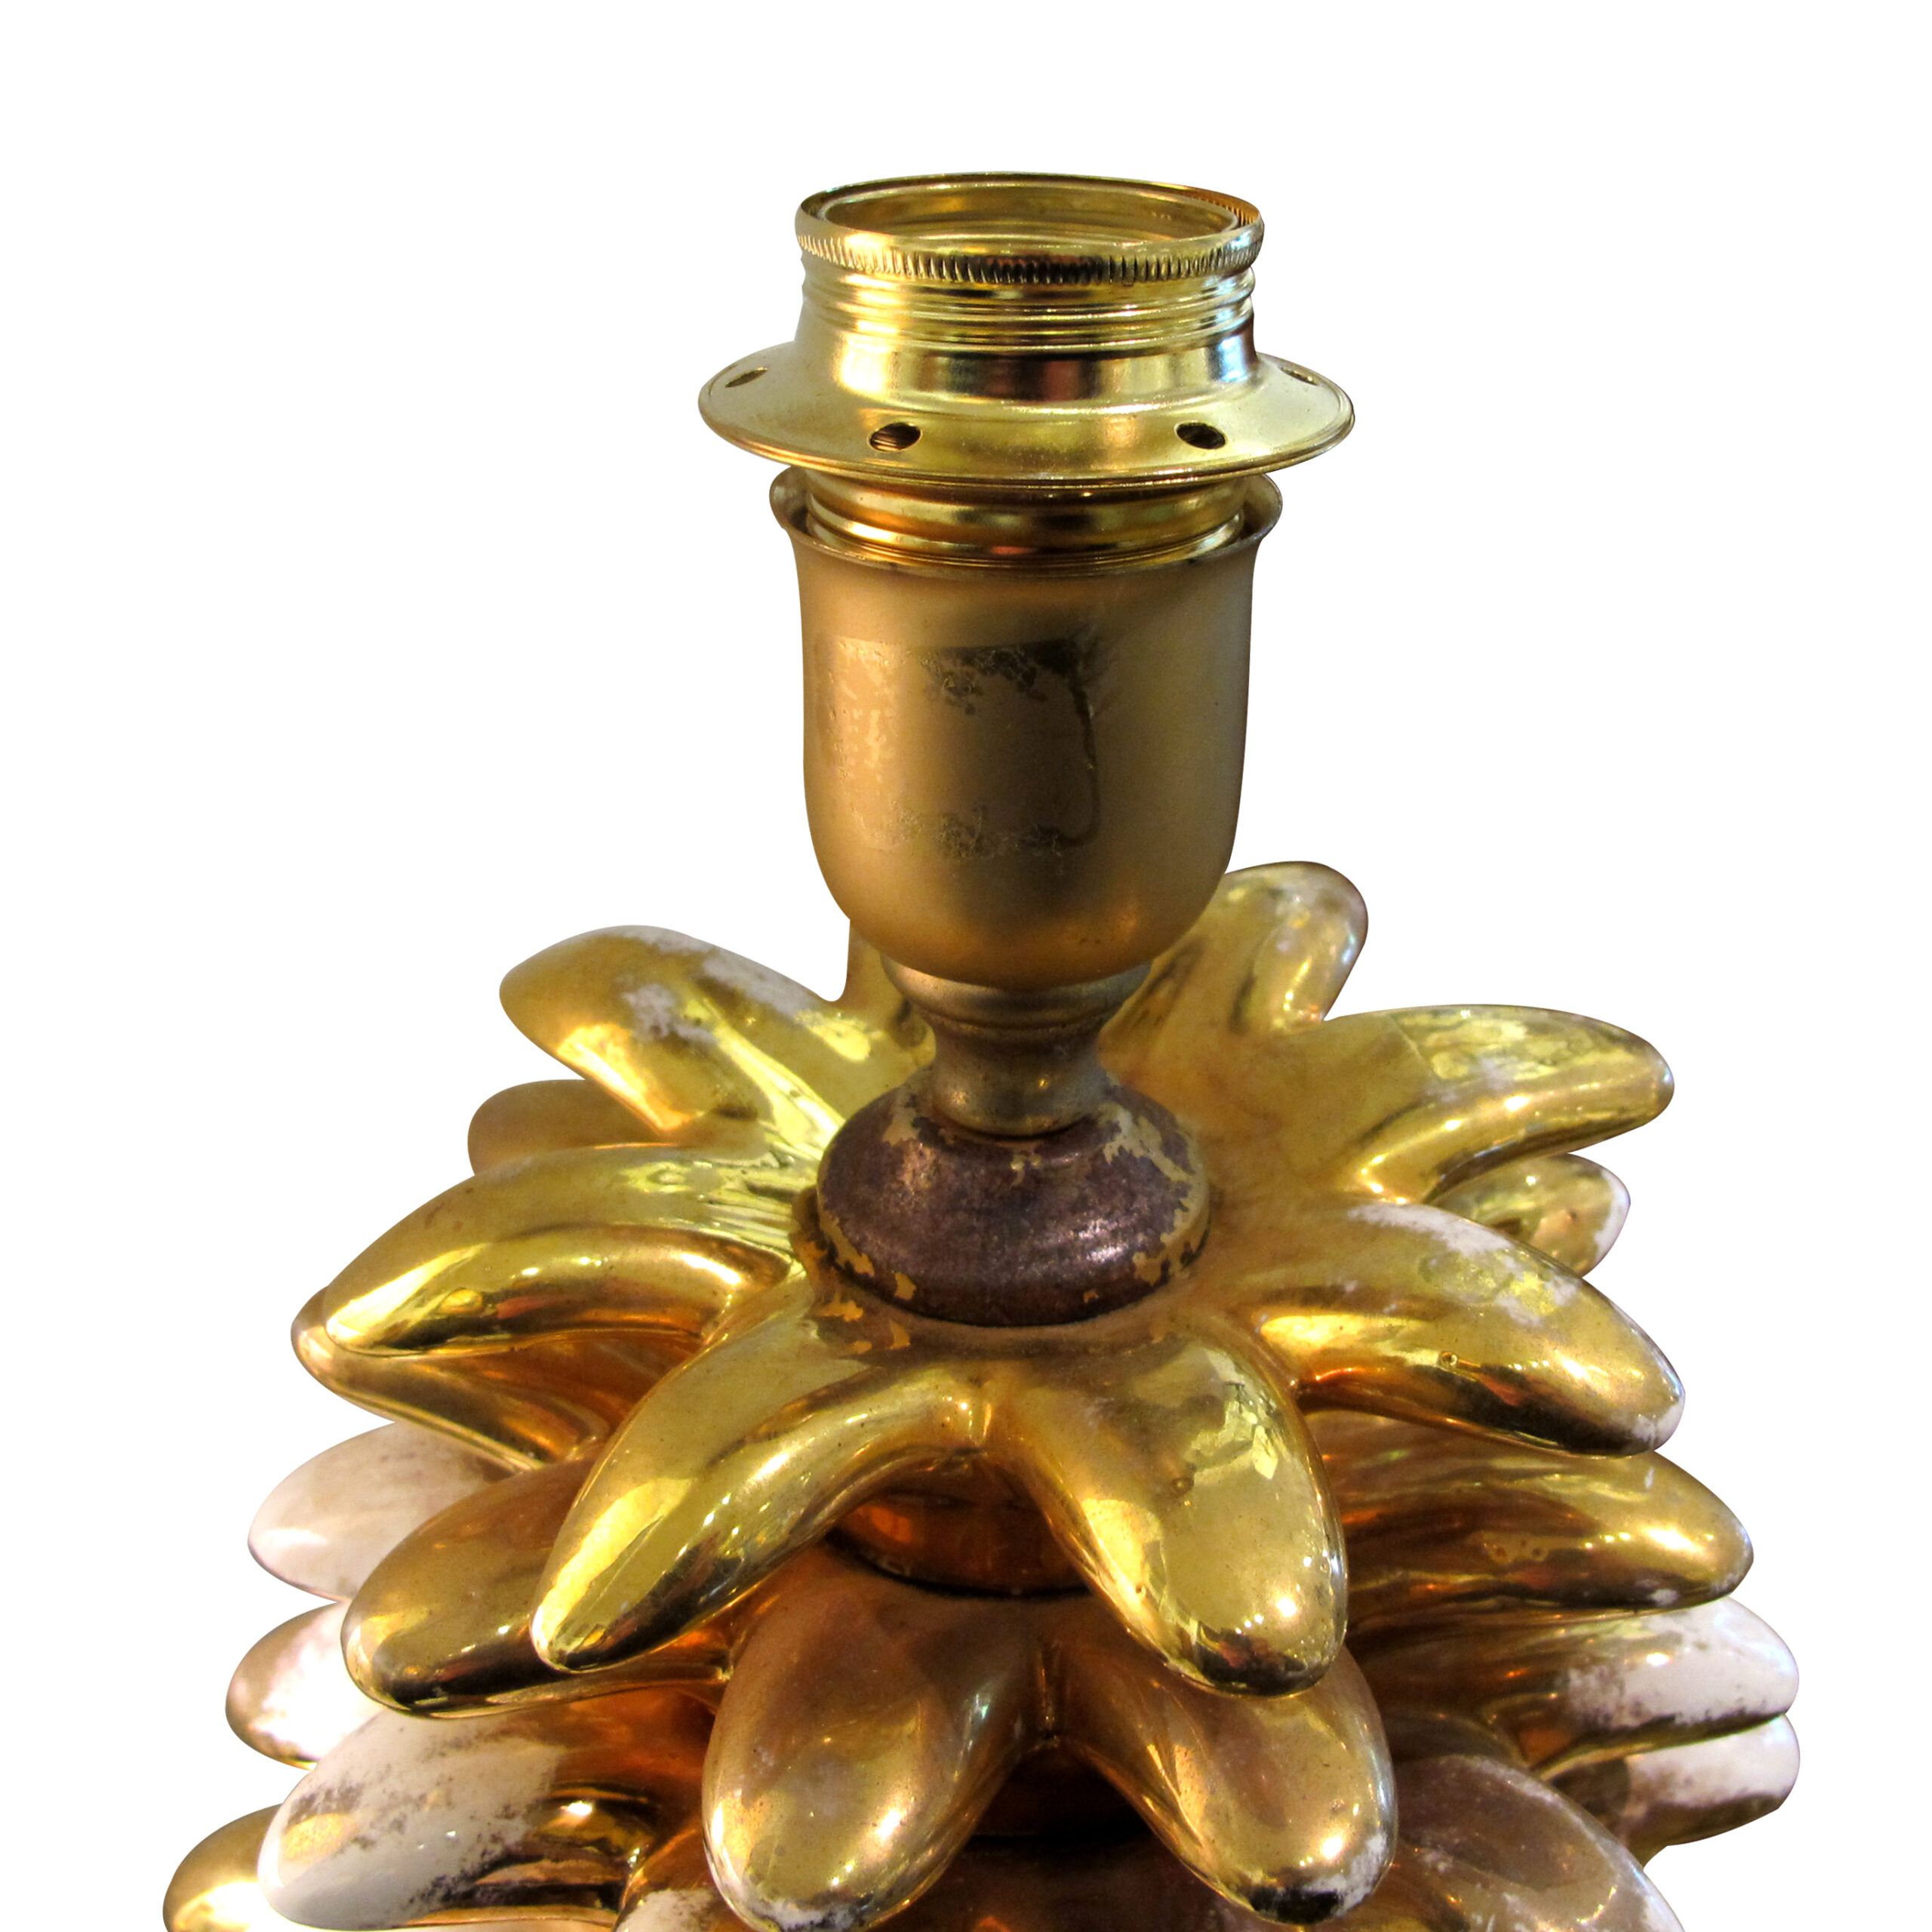 gold Italian Pineapple chandelier - Les Trois Garcons Interiors